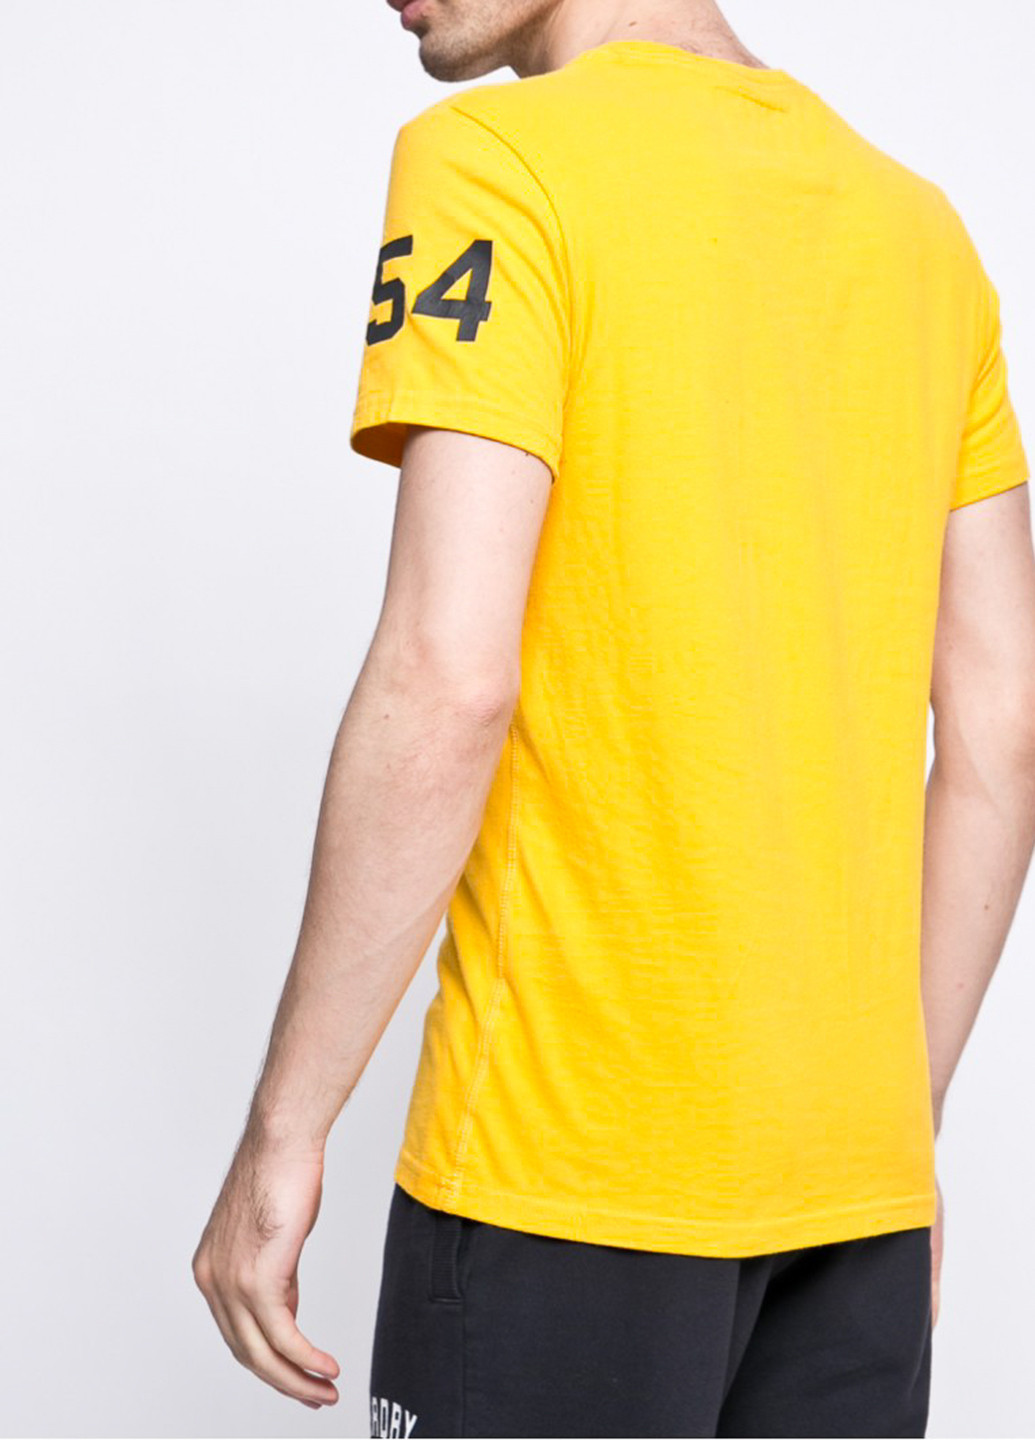 Желтая футболка Superdry